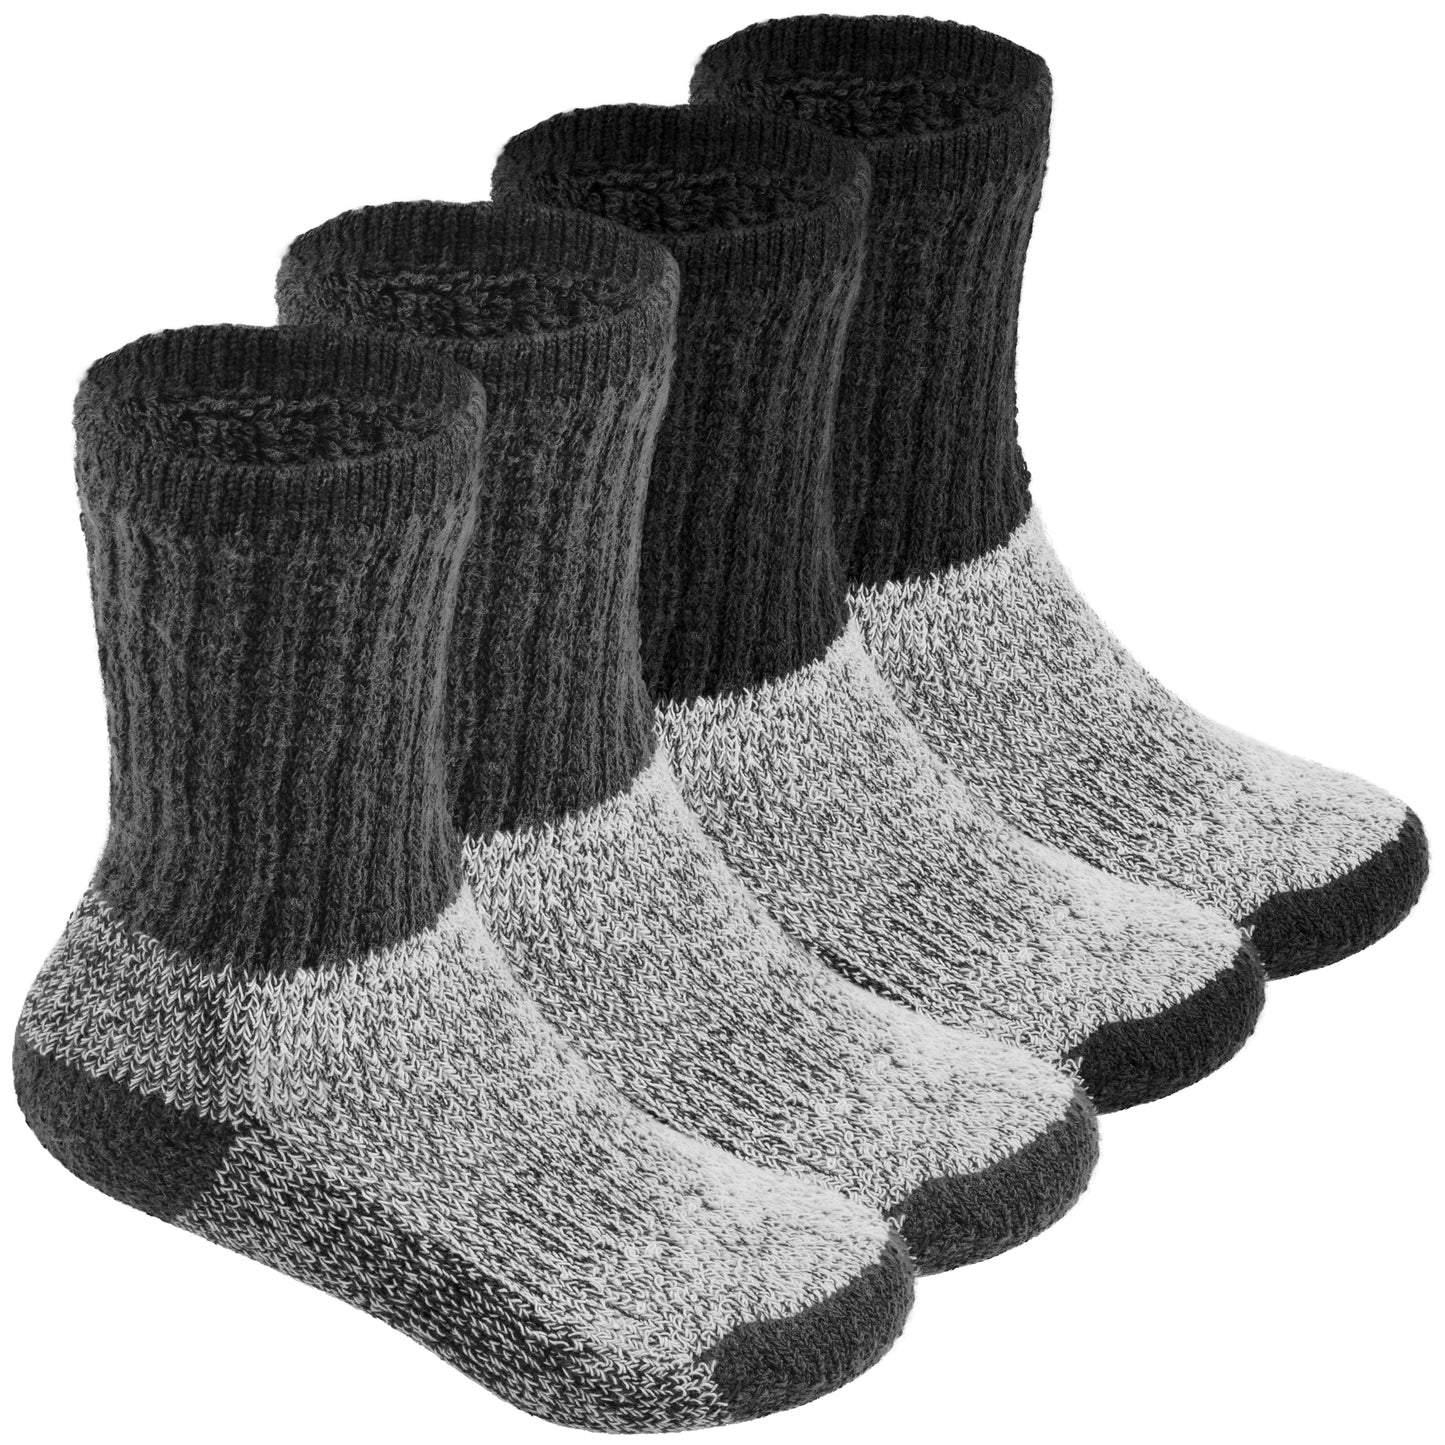 Thermal Socks for Kids - 2 Pairs